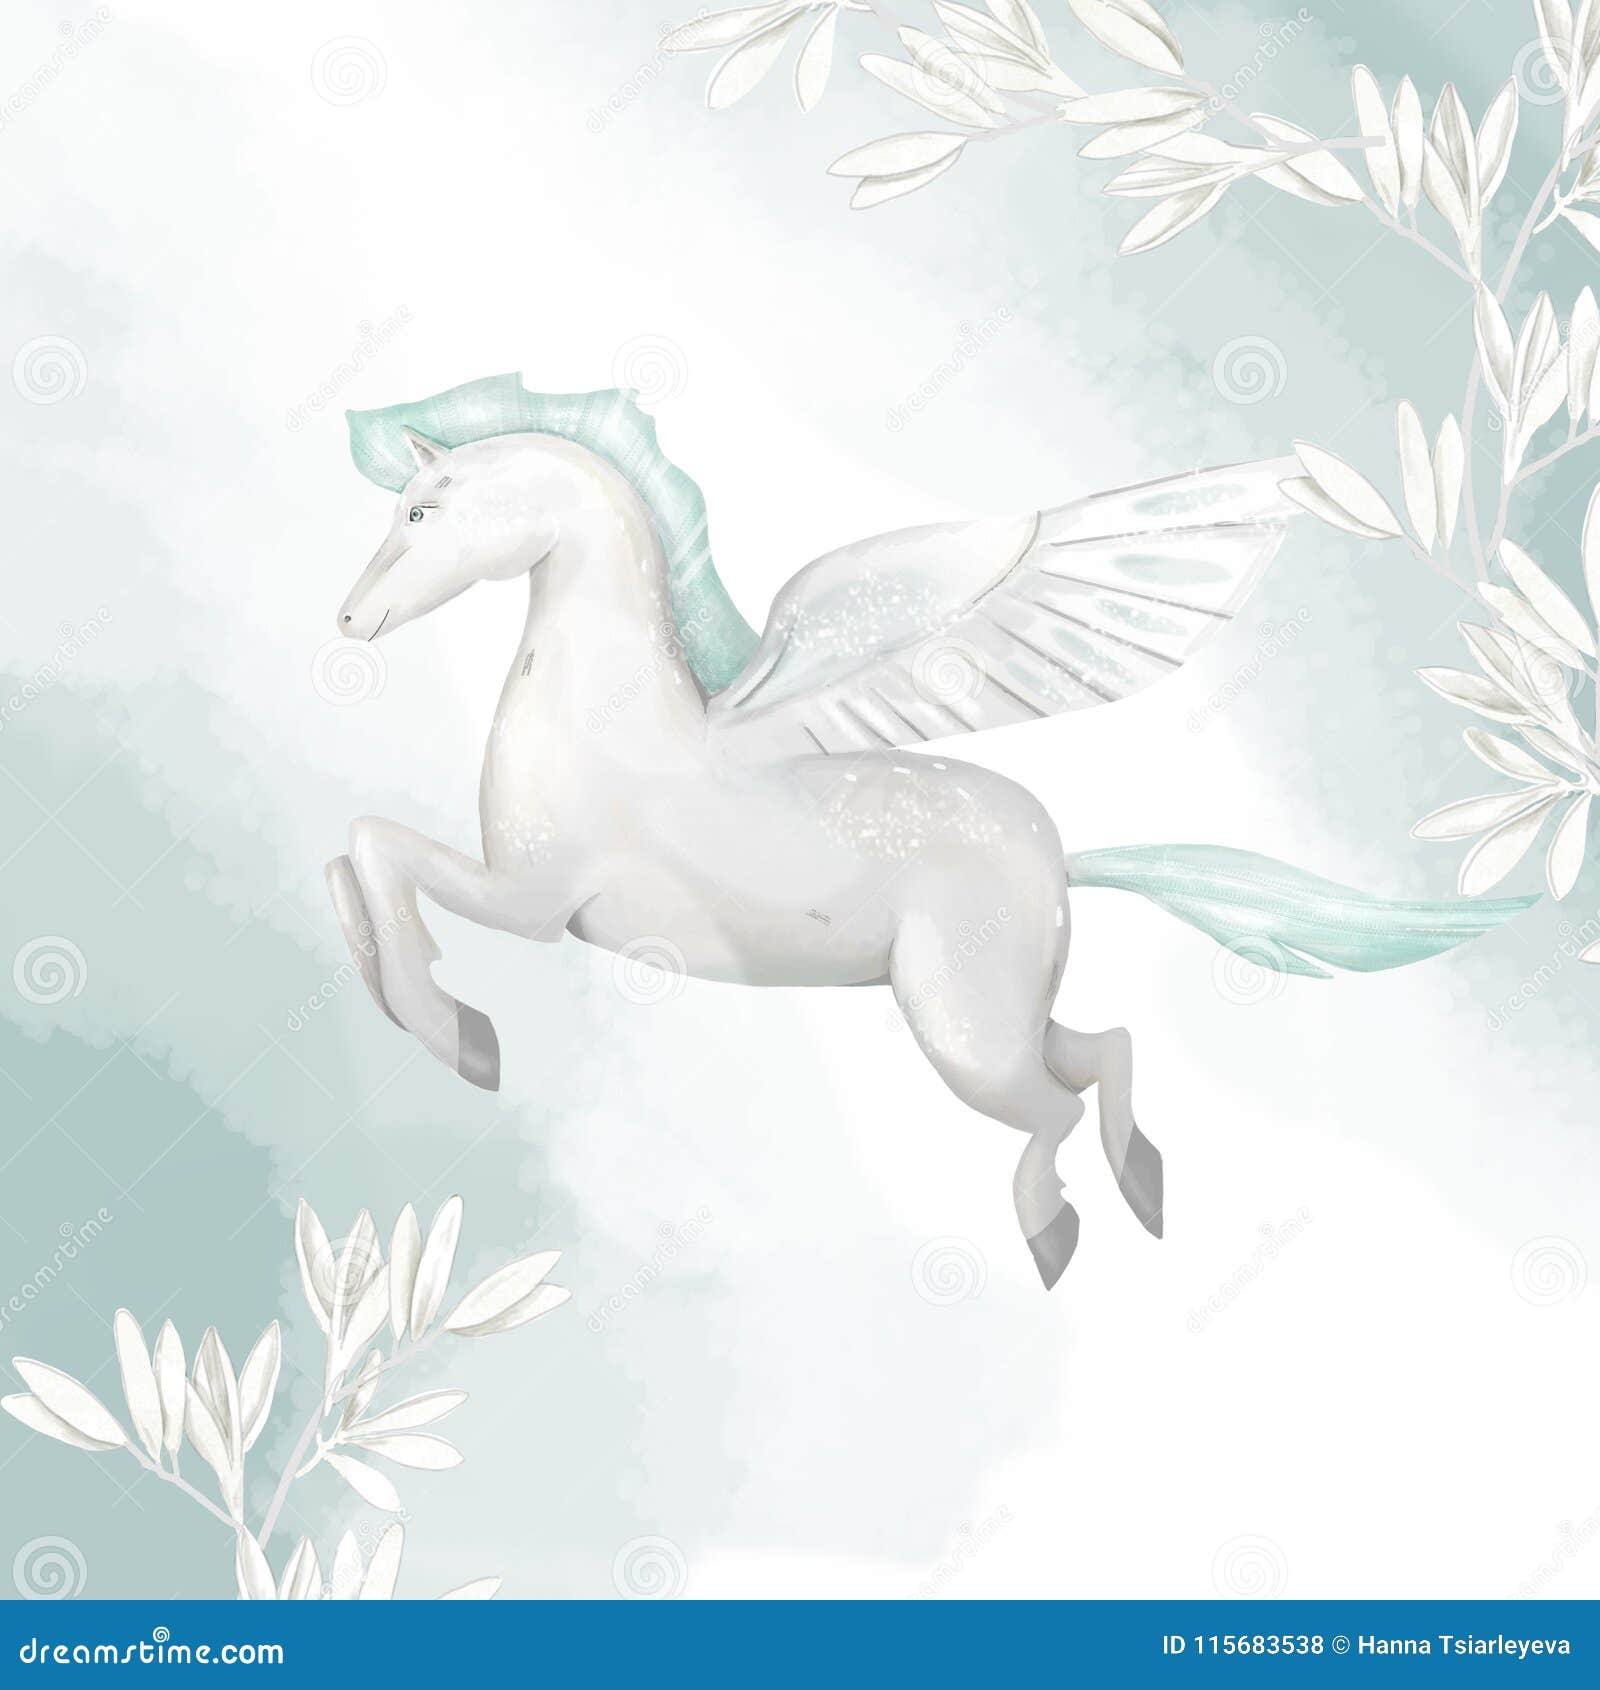 pegasus digital clip art fly pegasus drawing poni fly horse  magic unicorn greeting birthday celebration card fantasy